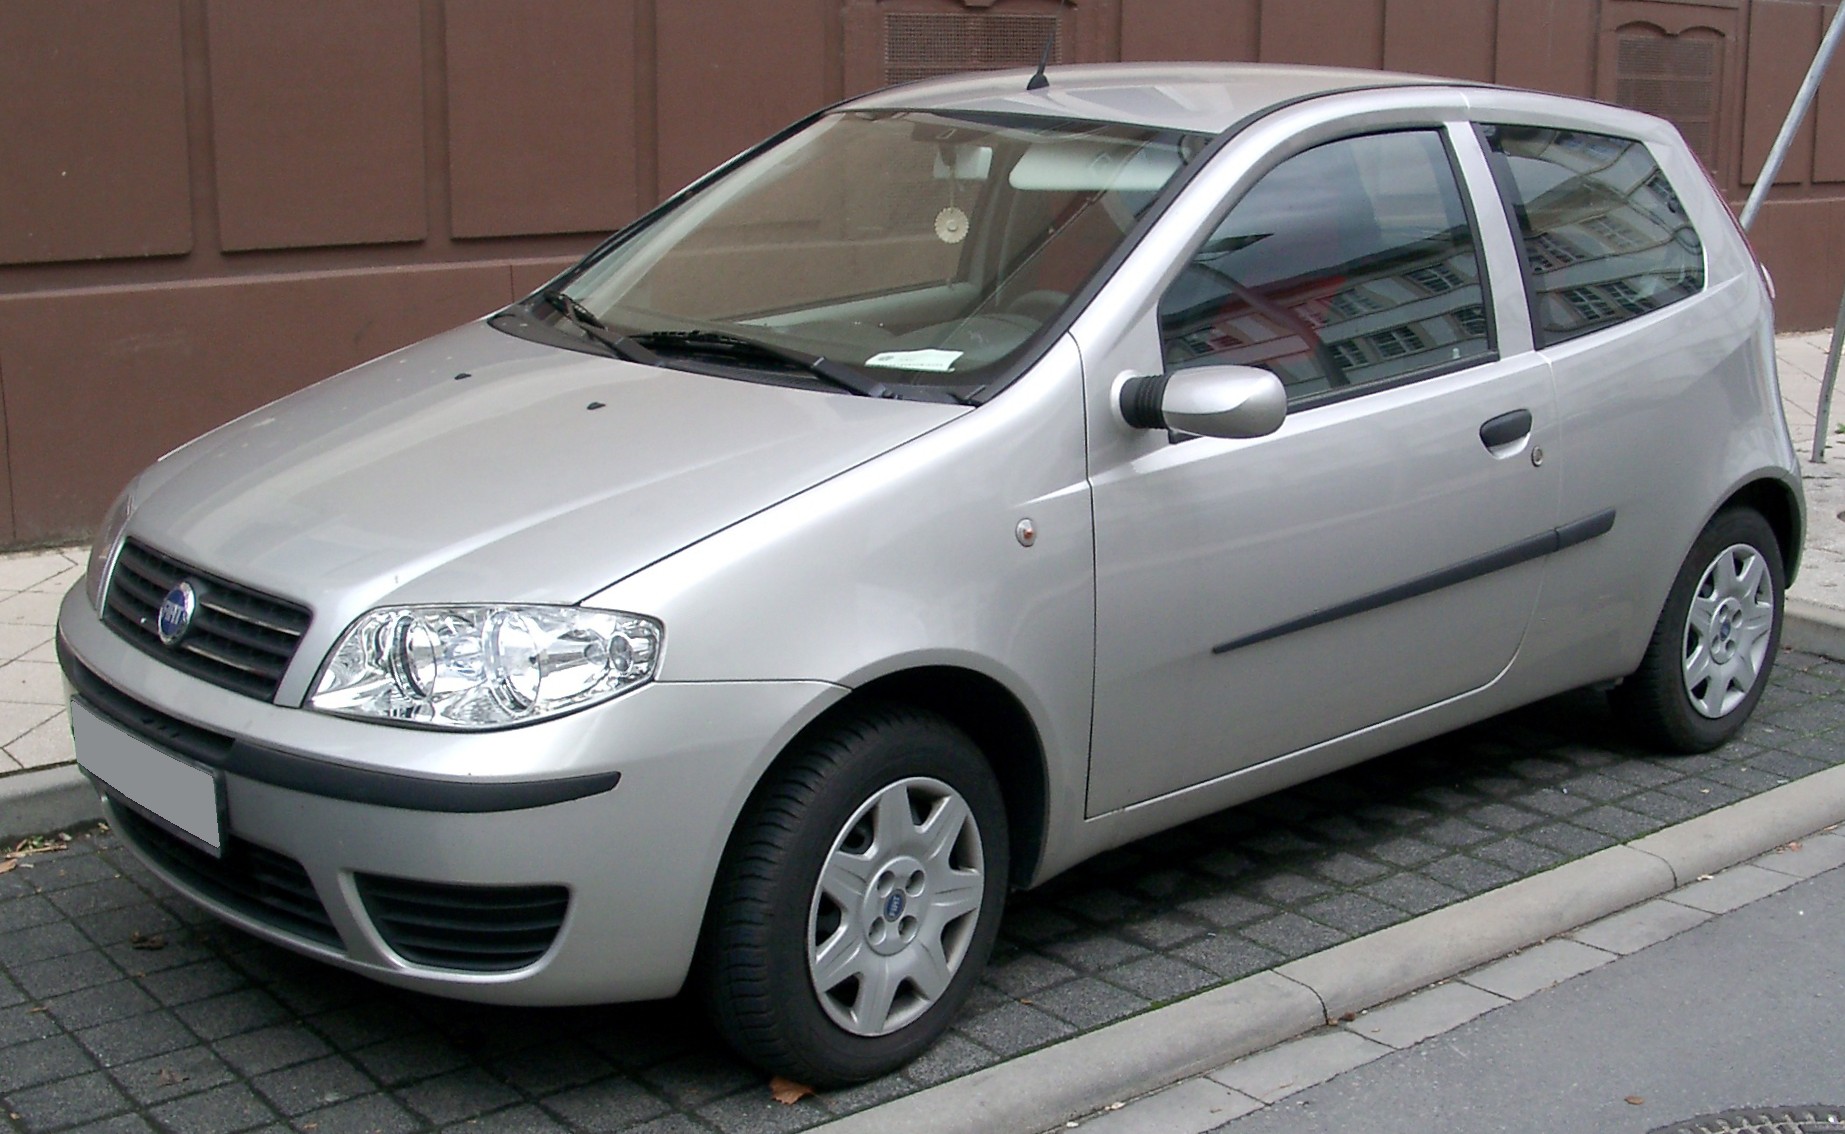 File:Fiat Grande Punto 20090906 front.JPG - Wikimedia Commons